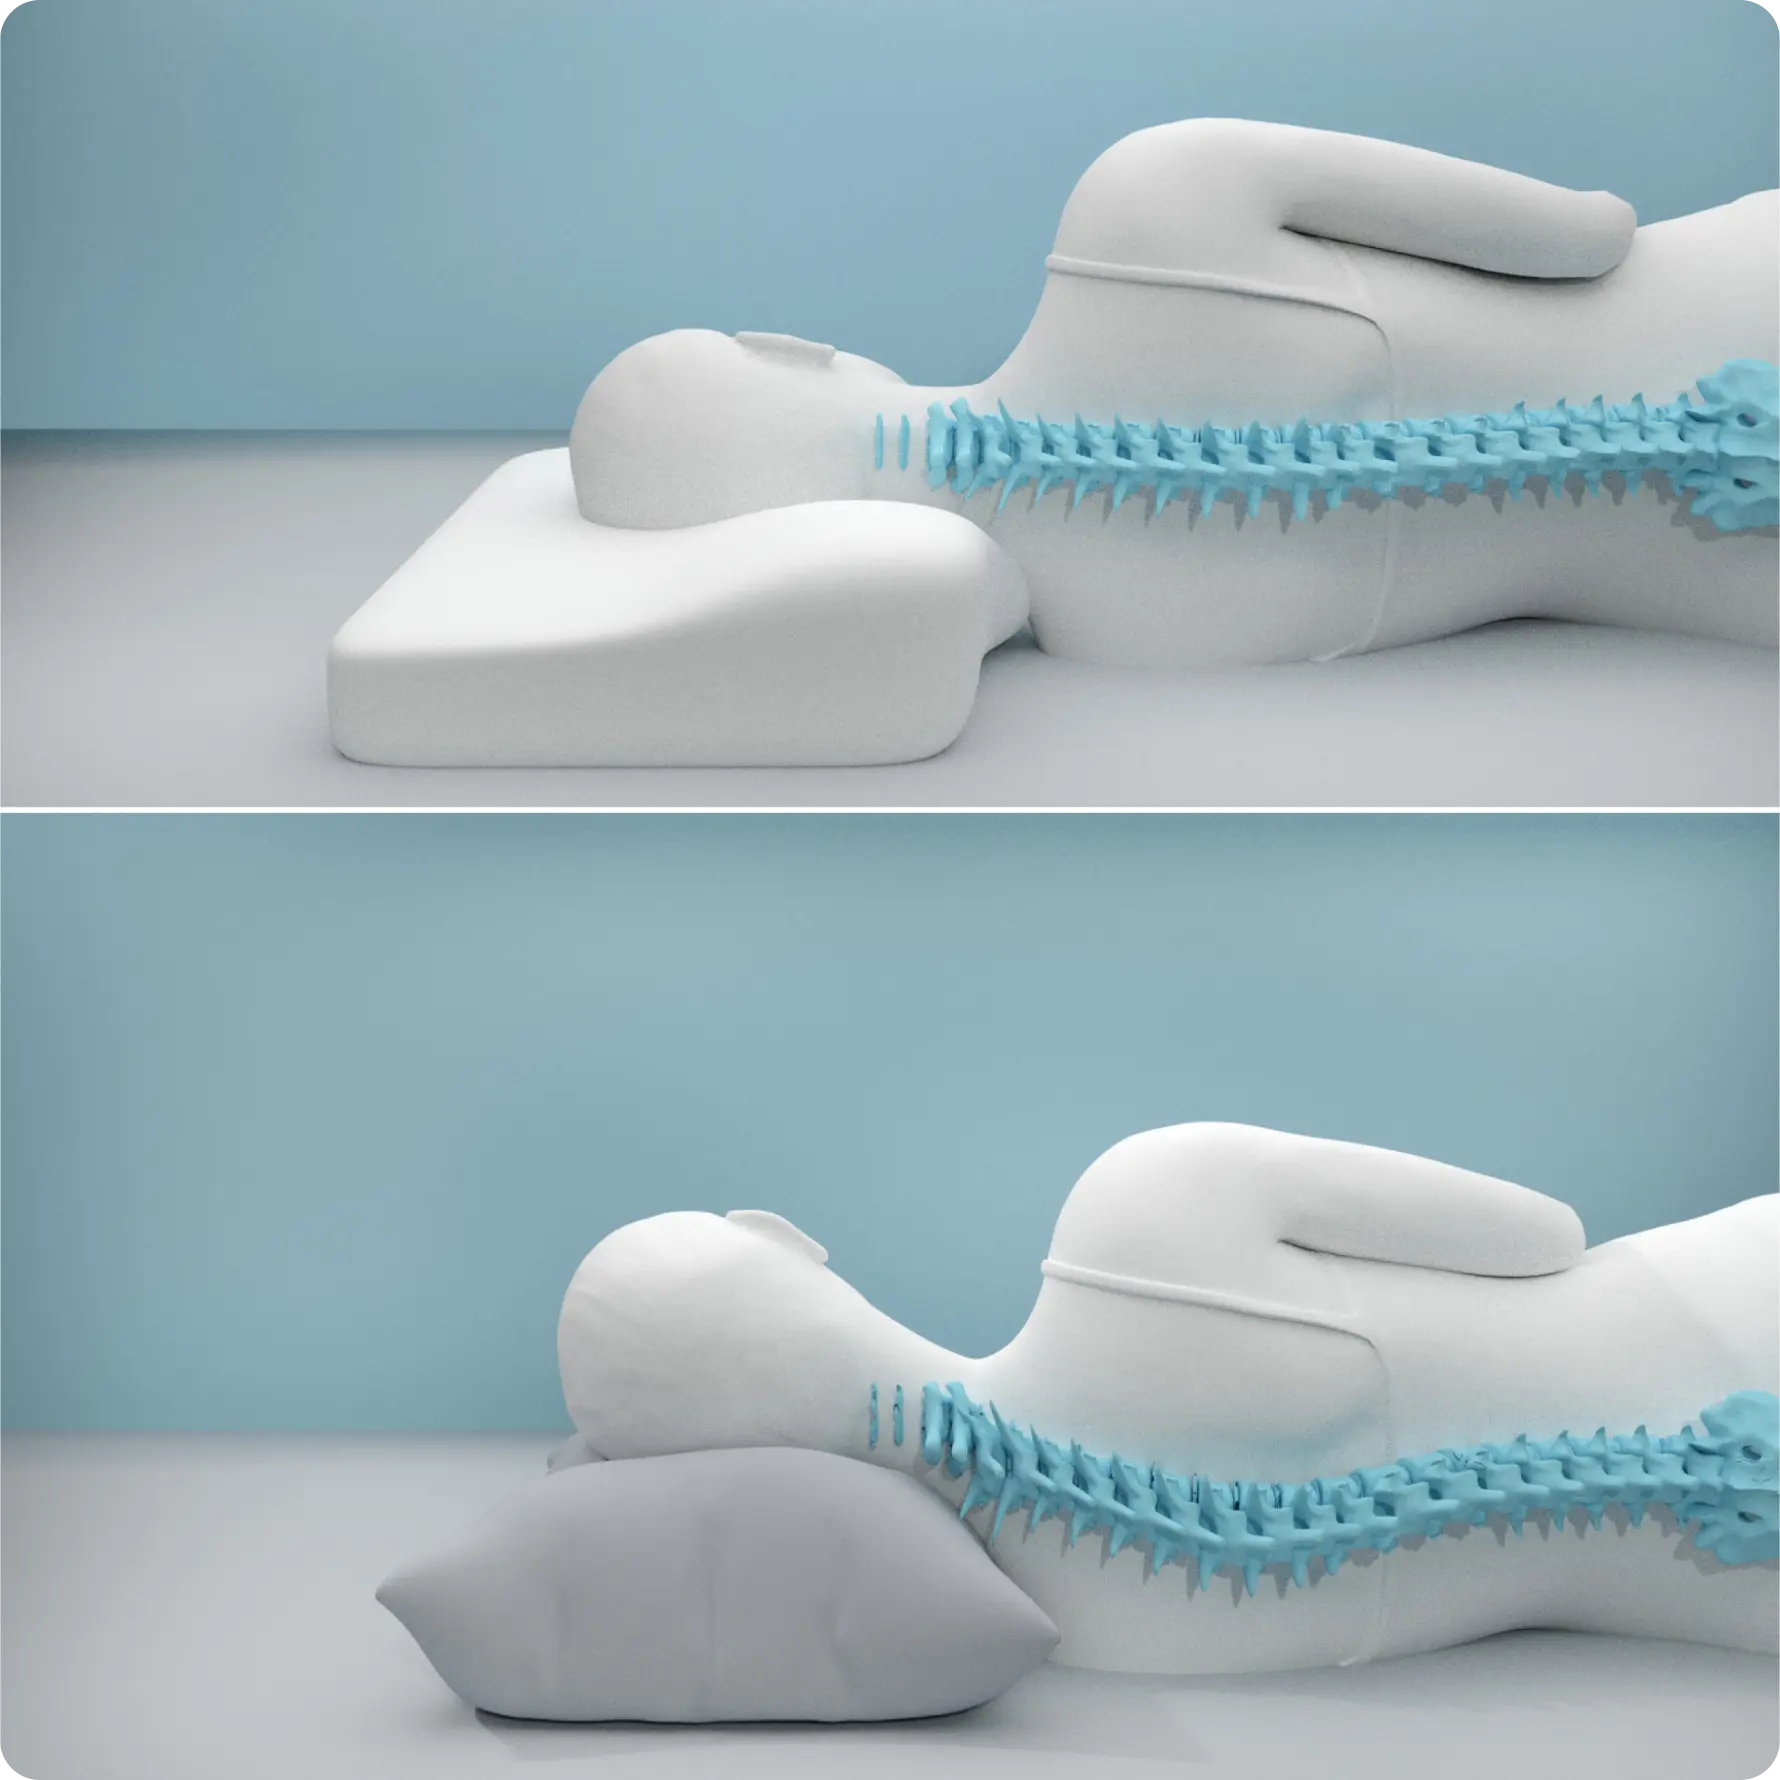 Dosaze™ Contoured Orthopedic Pillow